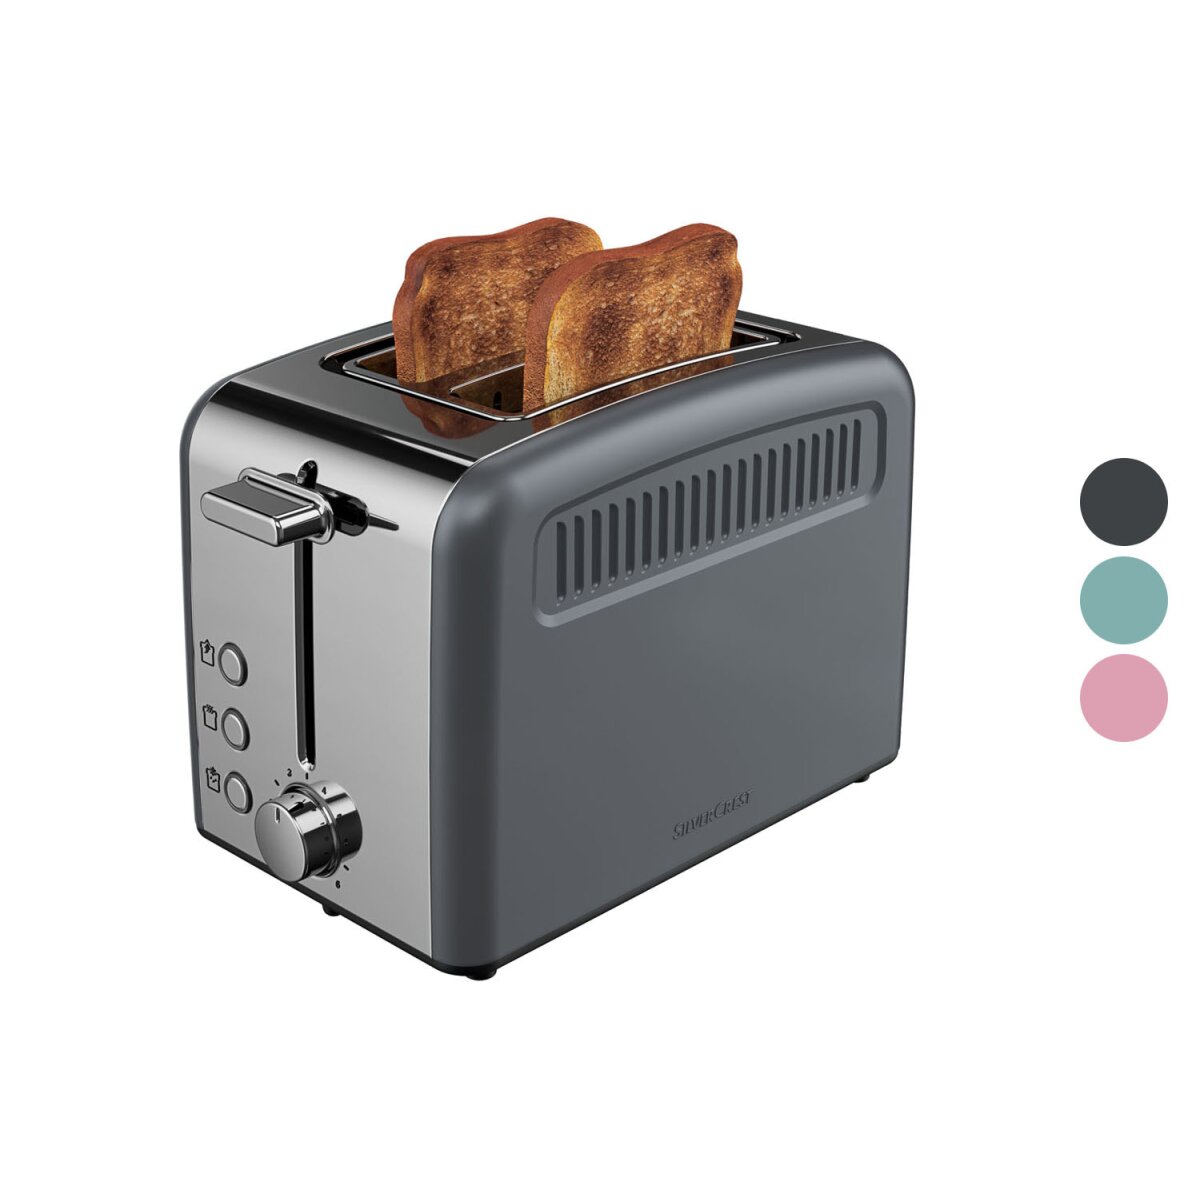 TOOLS B- »STC 13,99 Ware, € SILVERCREST® 950 - W 950 D3«, KITCHEN Doppleschlitz-Toaster